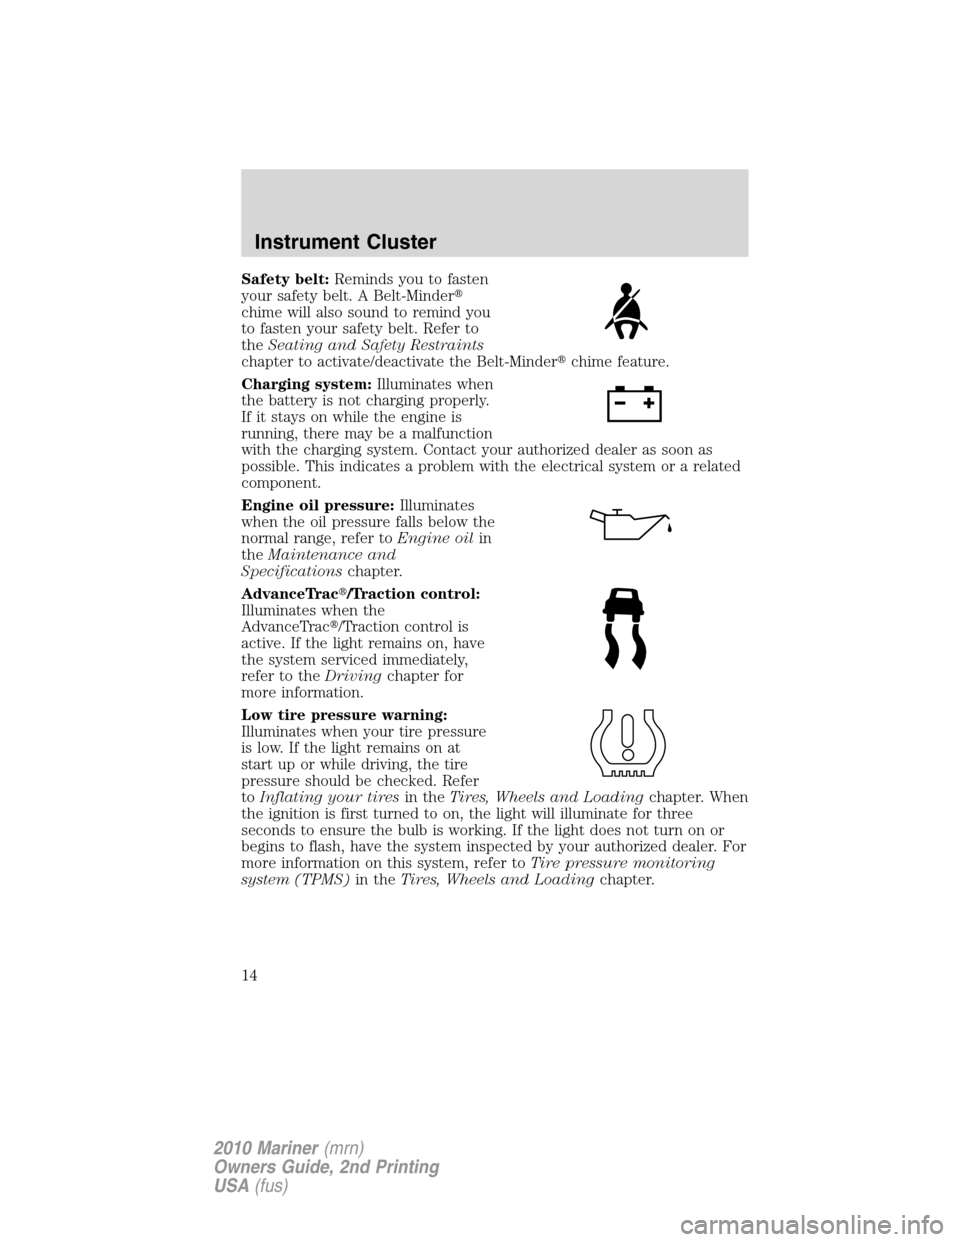 Mercury Mariner 2010  Owners Manuals Safety belt:Reminds you to fasten
your safety belt. A Belt-Minder
chime will also sound to remind you
to fasten your safety belt. Refer to
theSeating and Safety Restraints
chapter to activate/deactiv